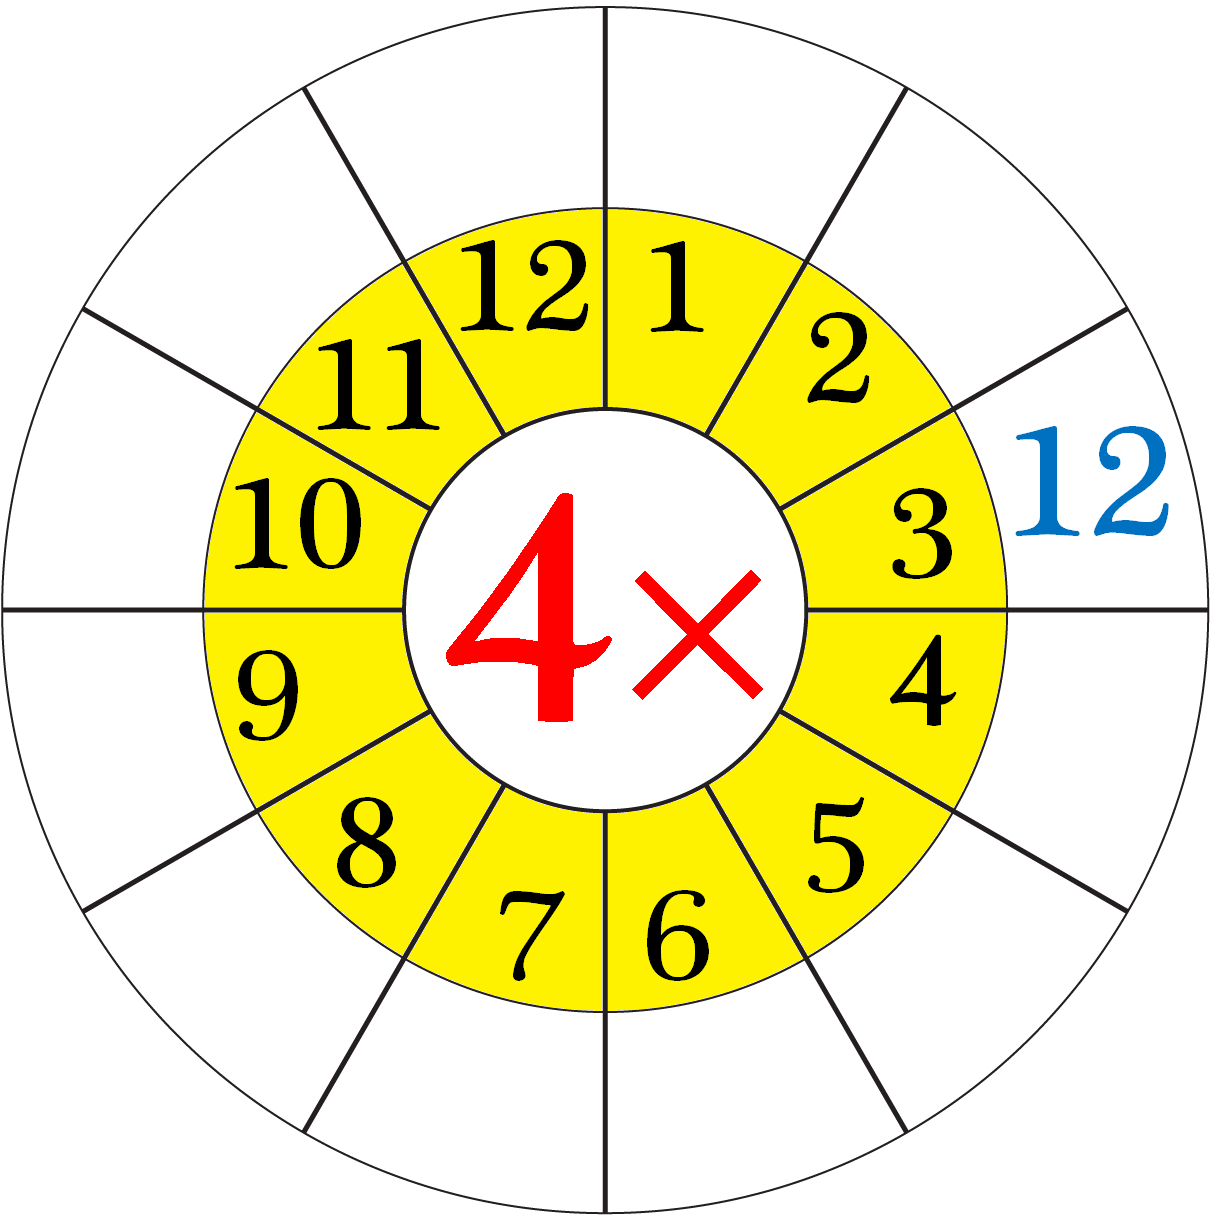 Worksheet on Multiplication Table of 4